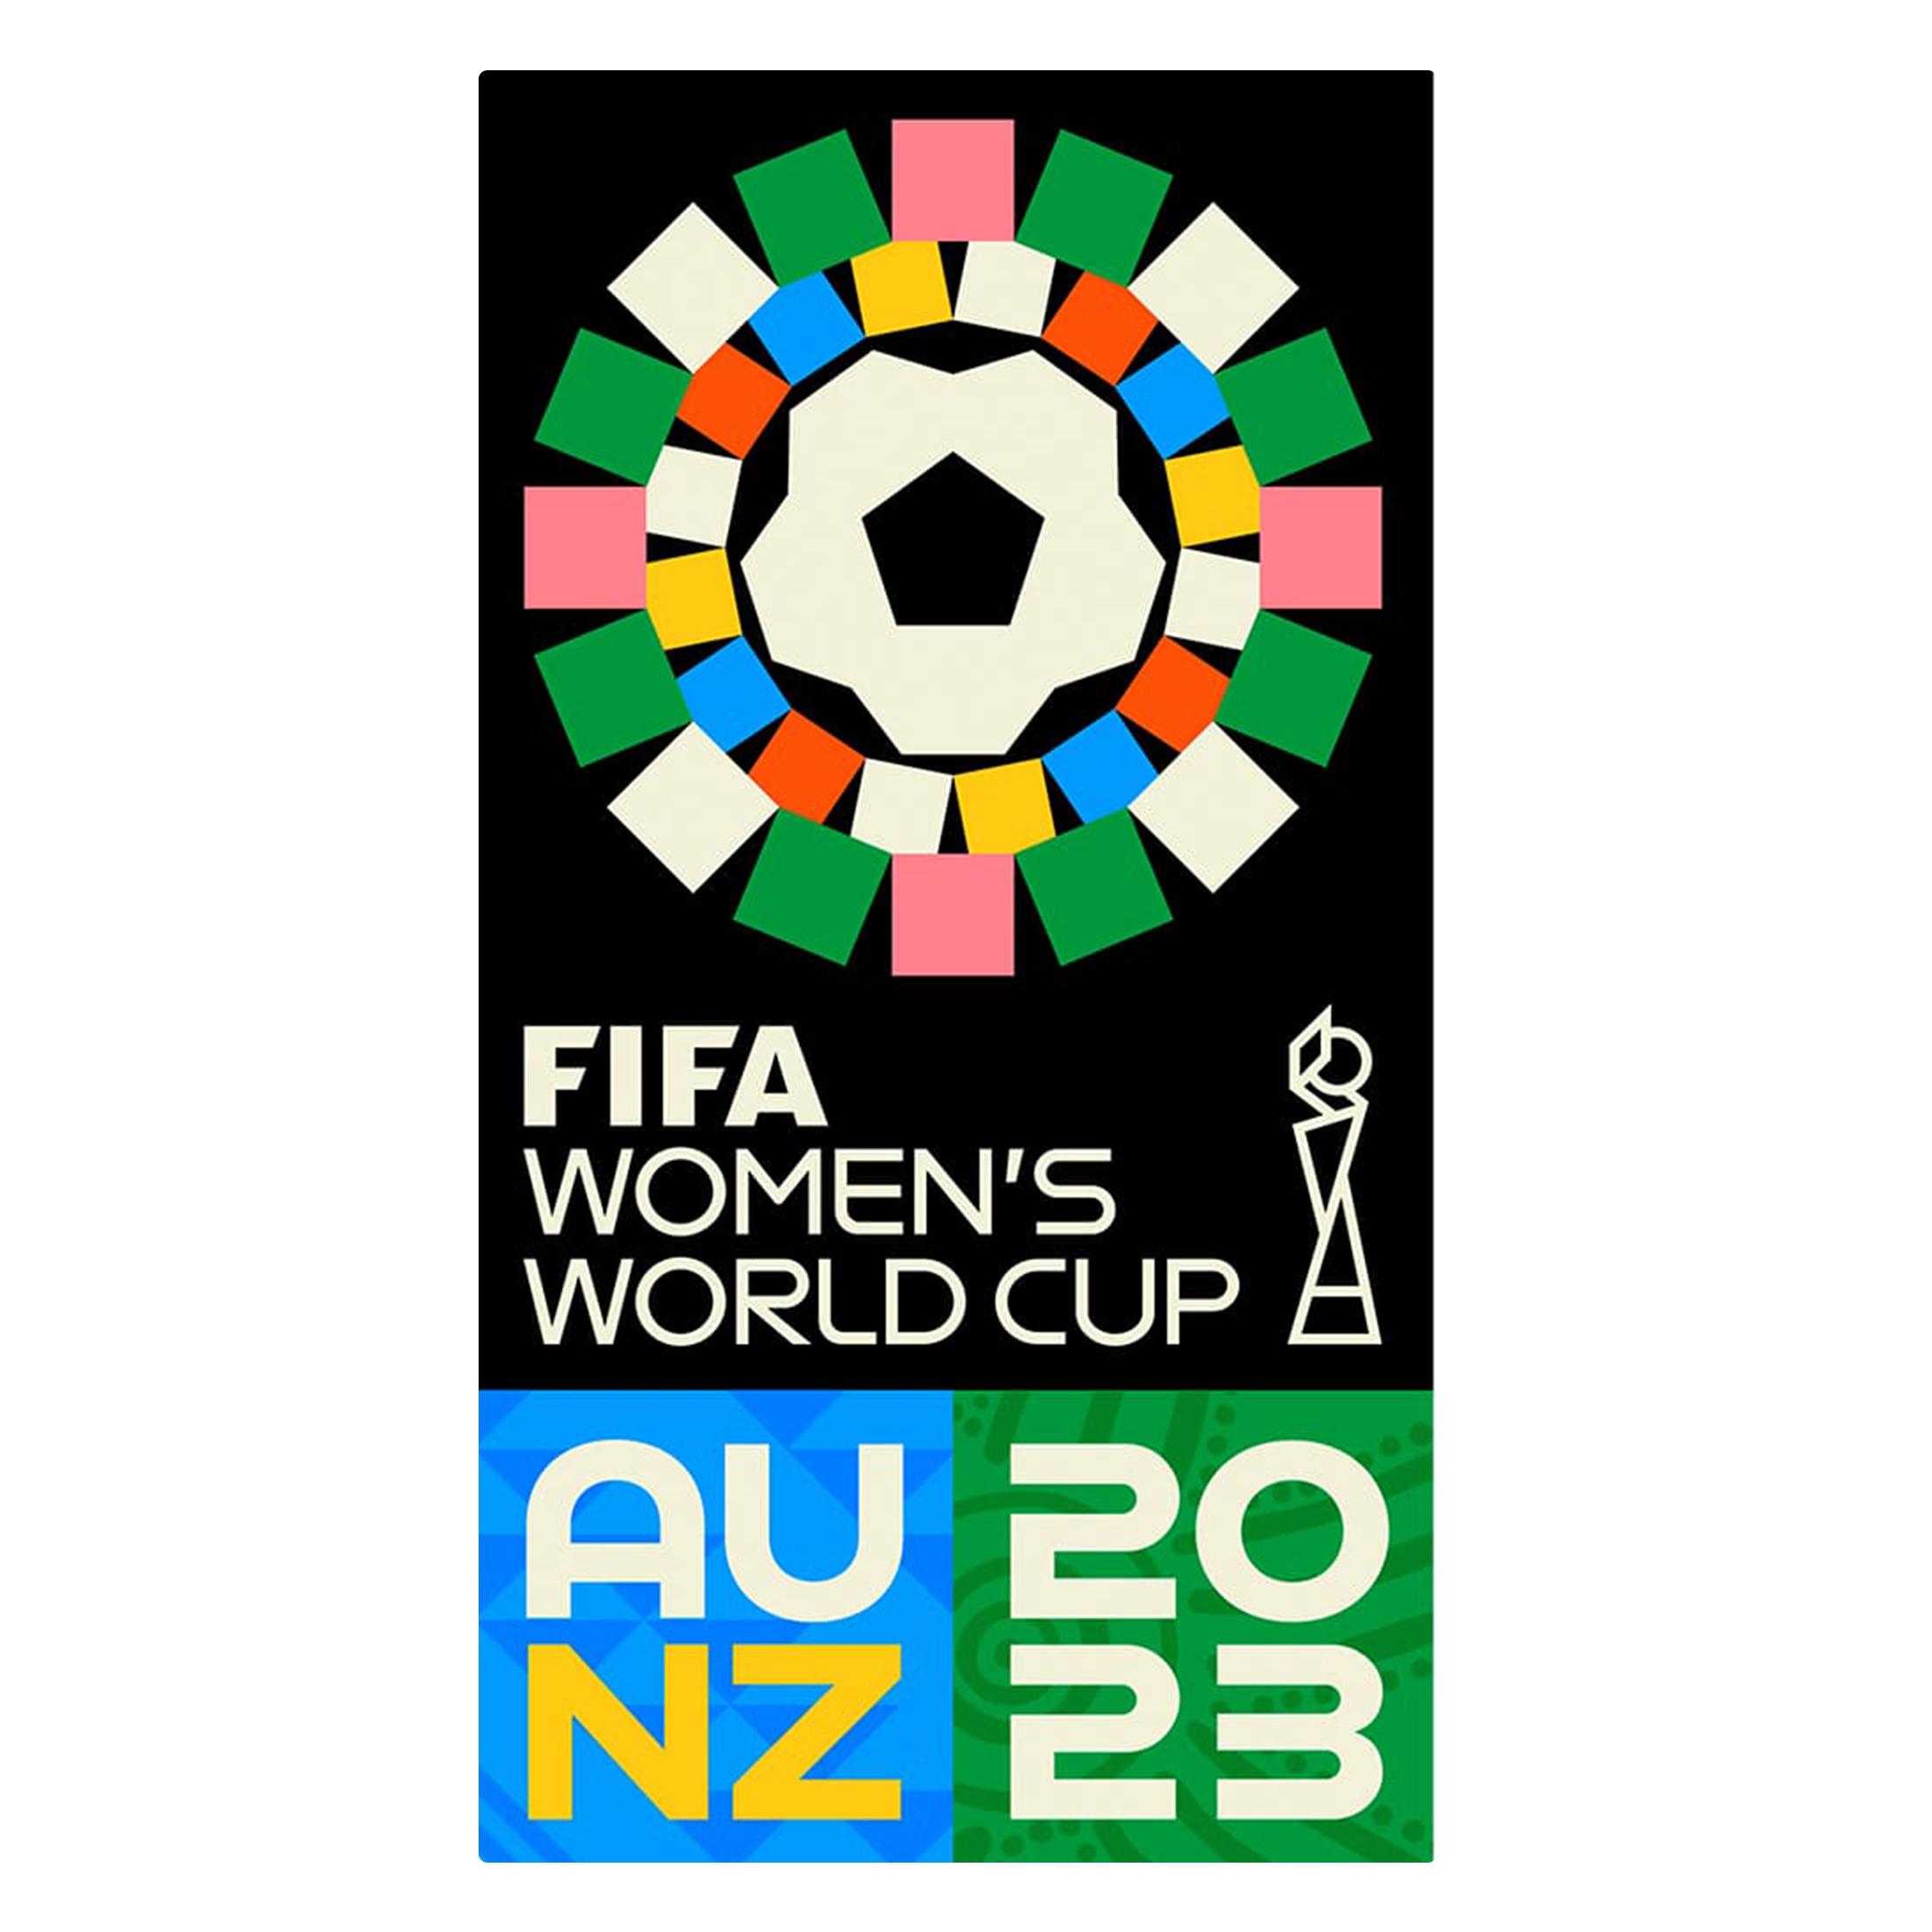 Fifa Women's World Cup logo